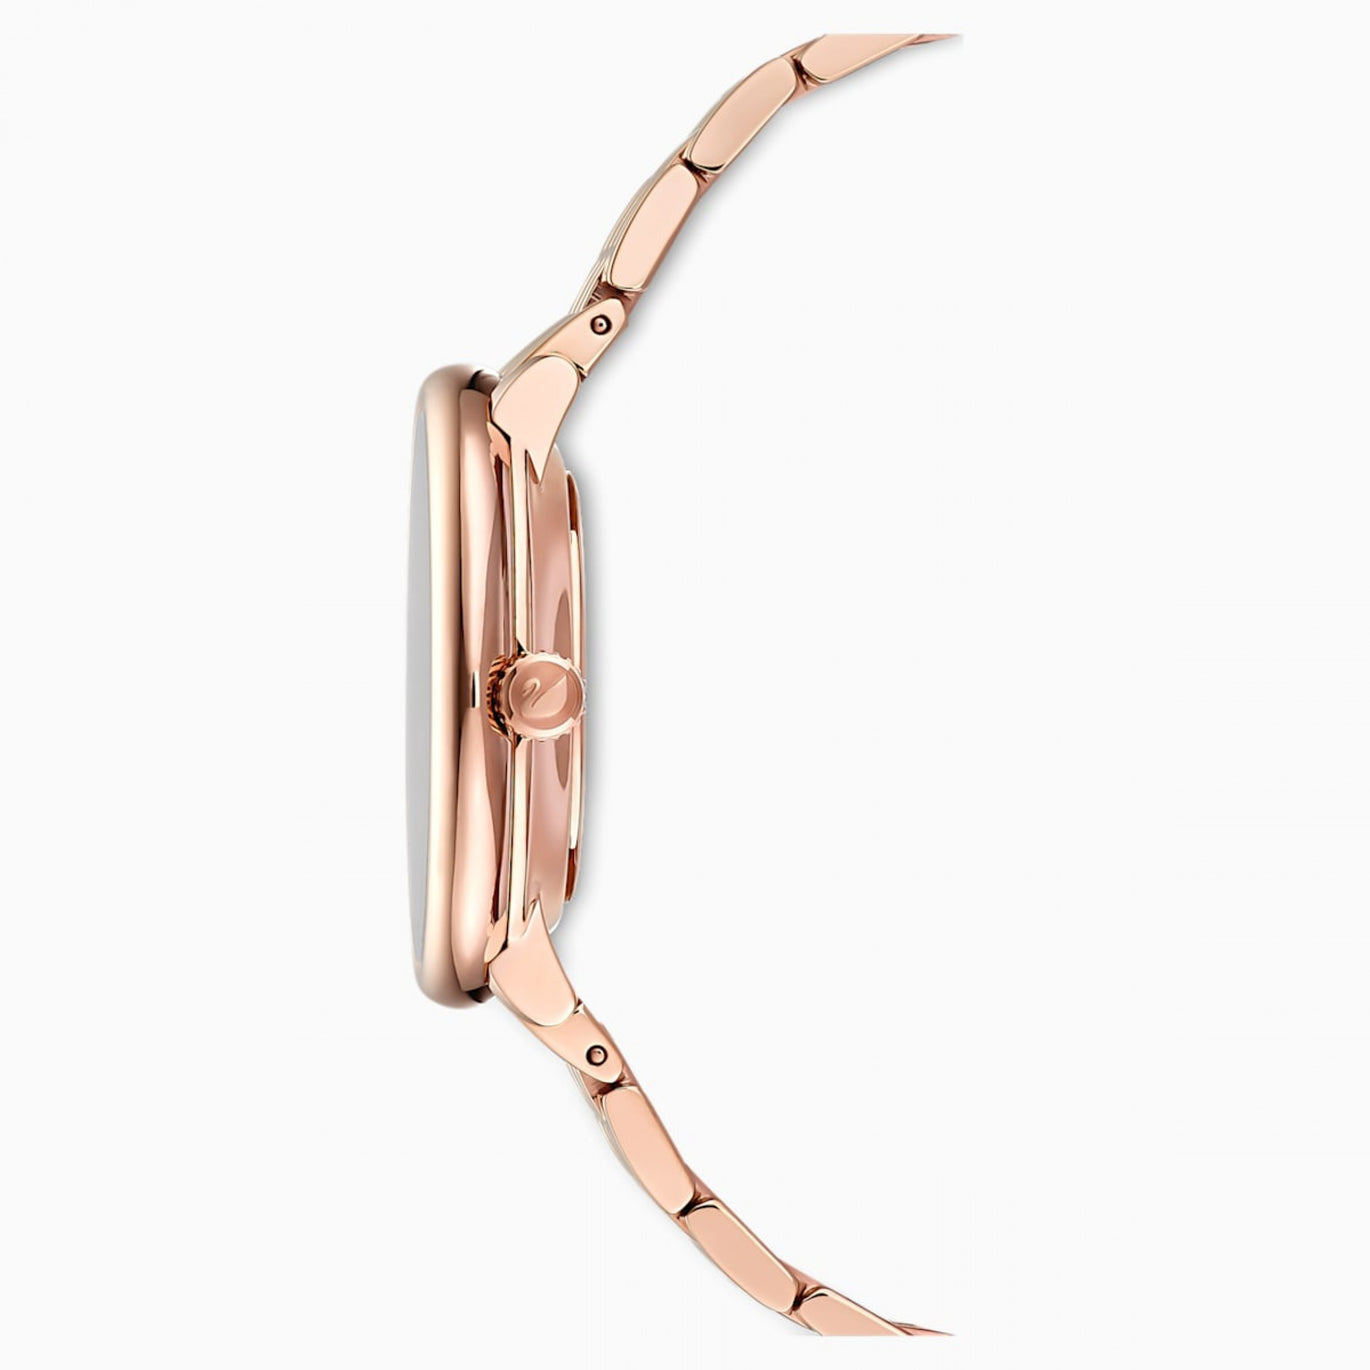 Swarovski Crystalline Chic Watch, Bracelet Strap, Rose Gold Plated